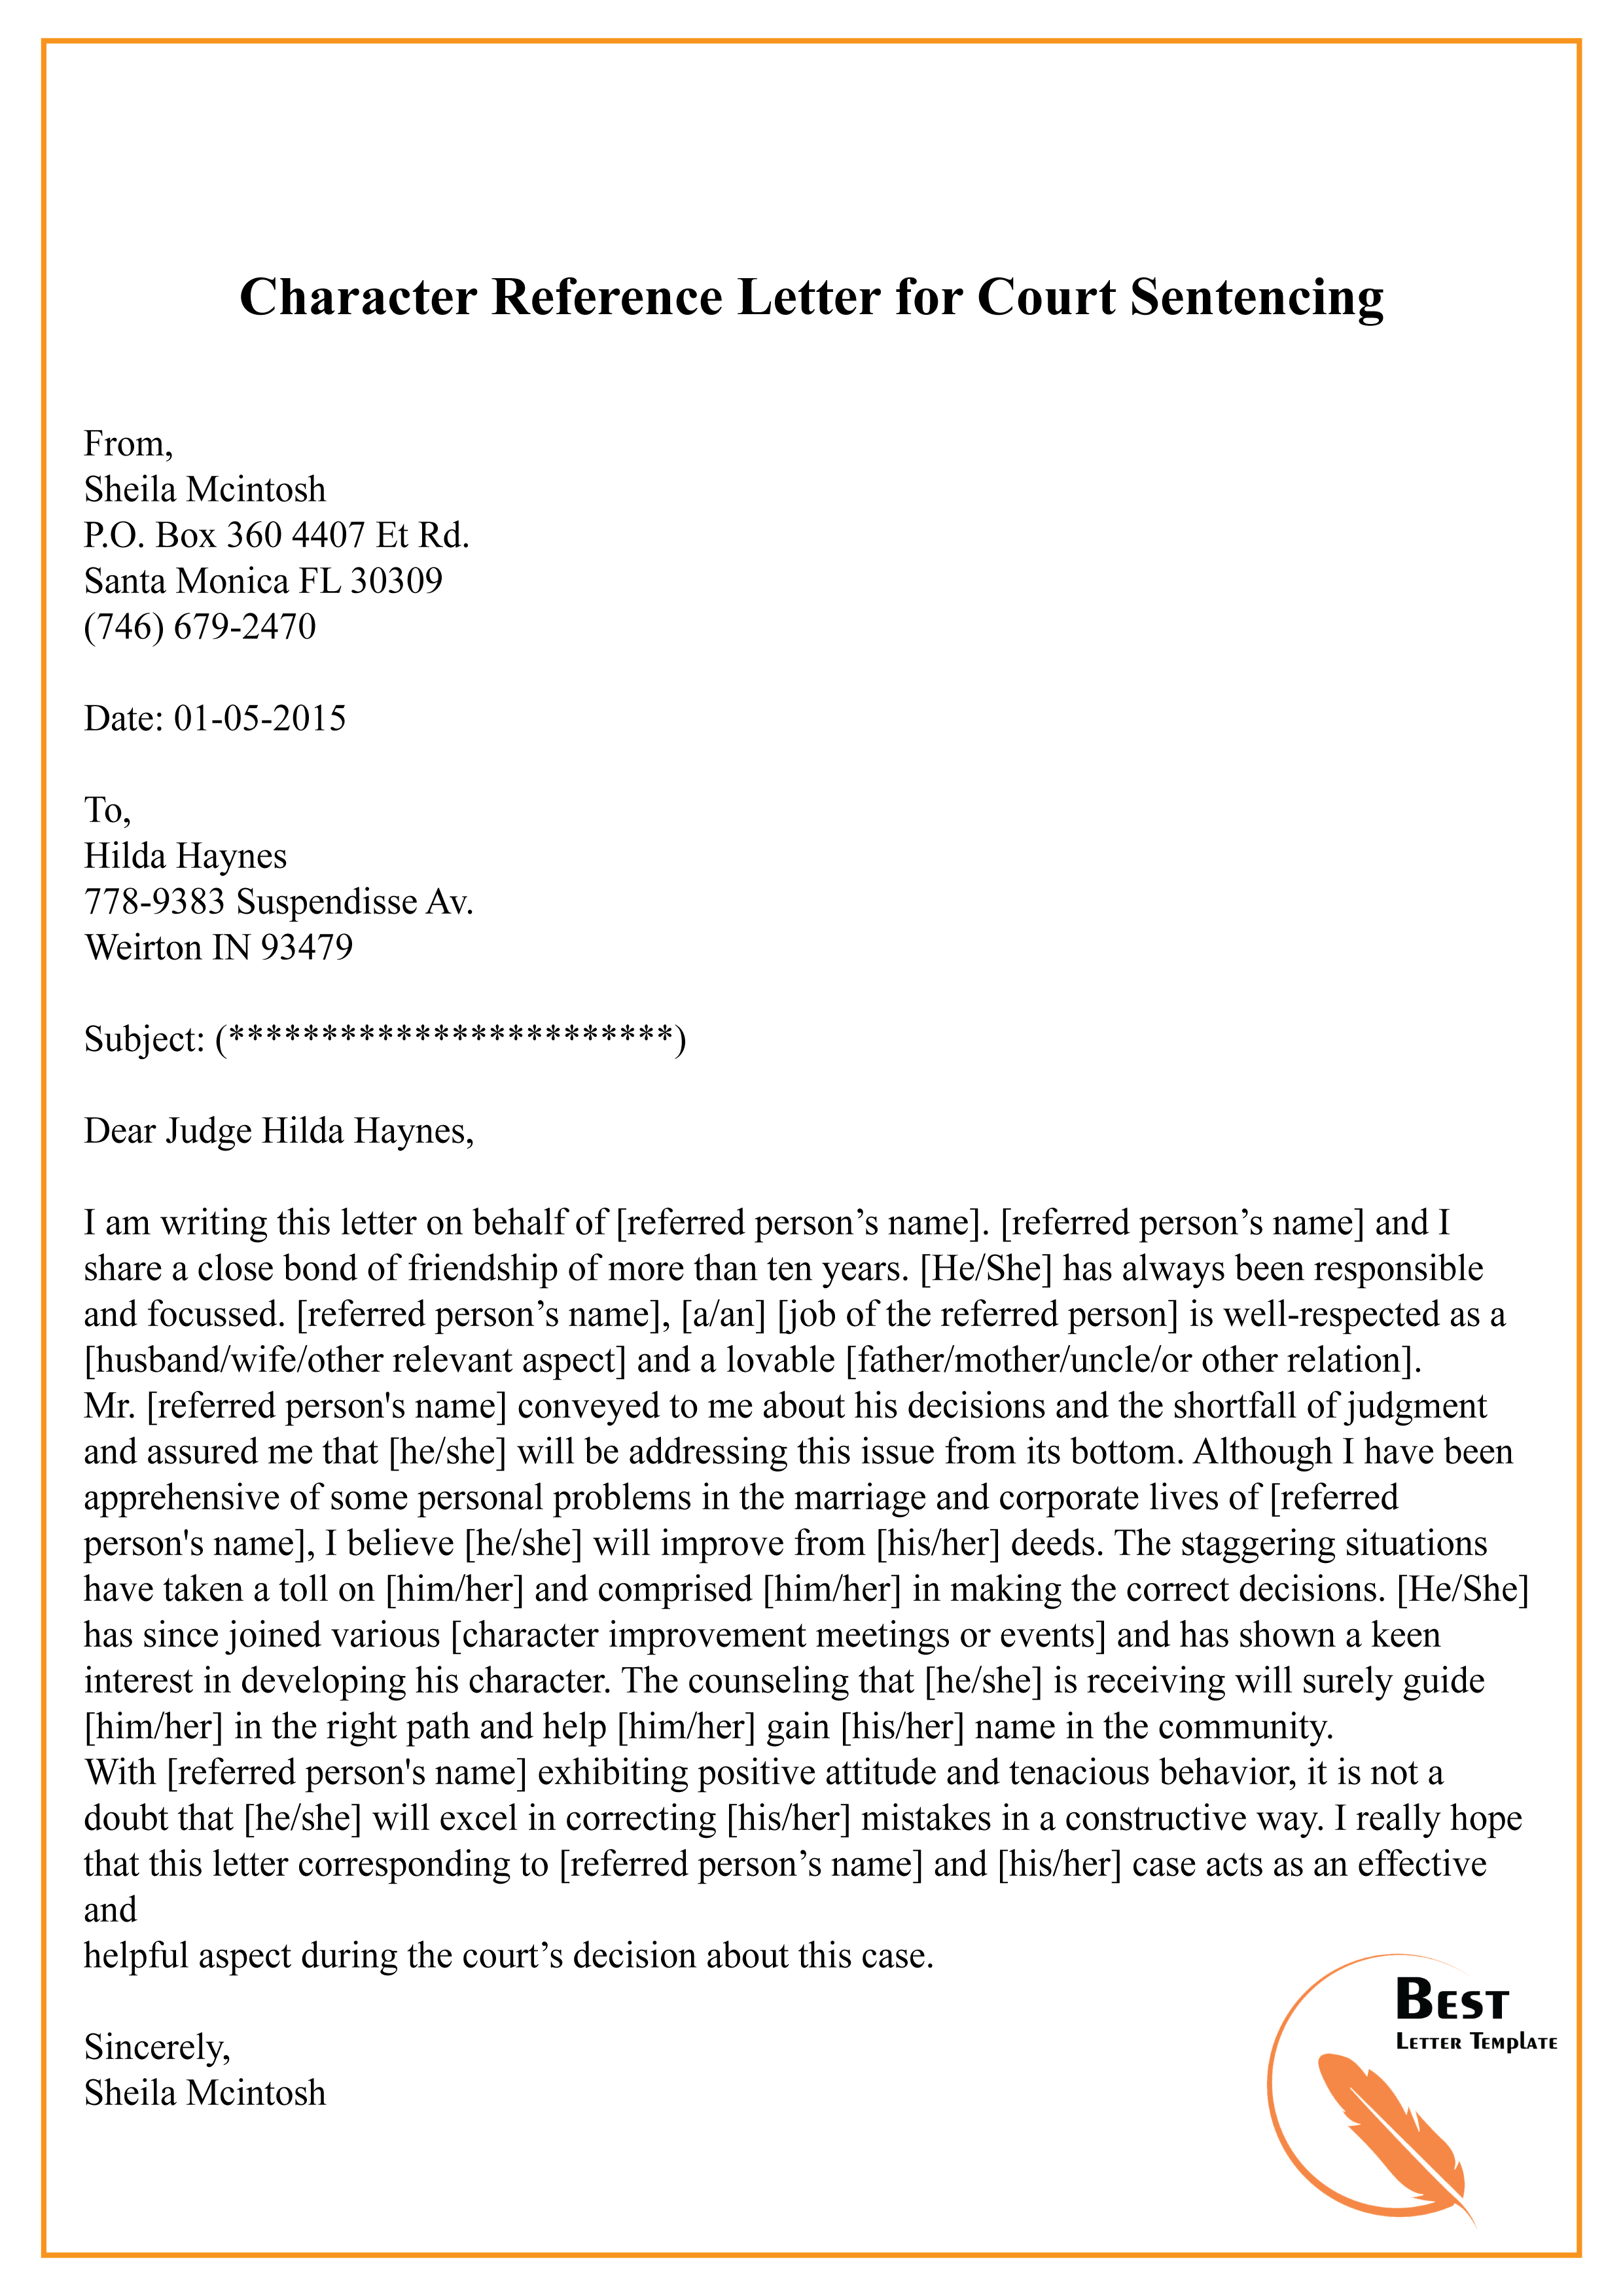 Sample Character Letter For Court